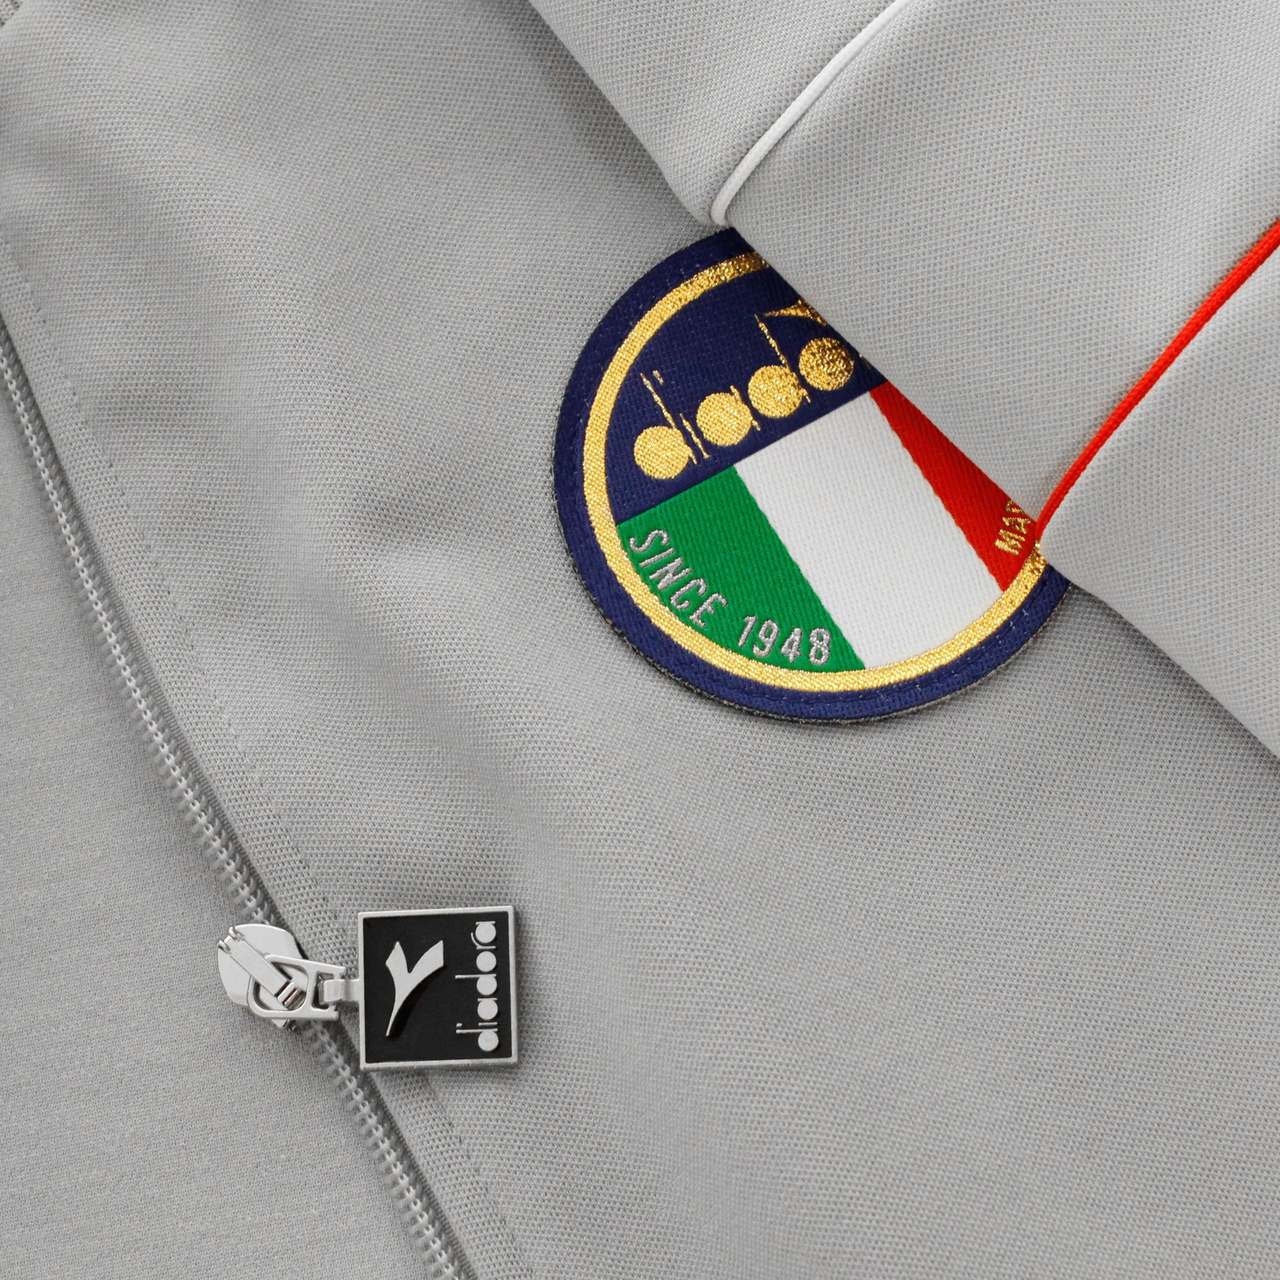 Diadora 80s Logo - Diadora 80s ITA Track Jacket Rise. Retro. Football shirt blog